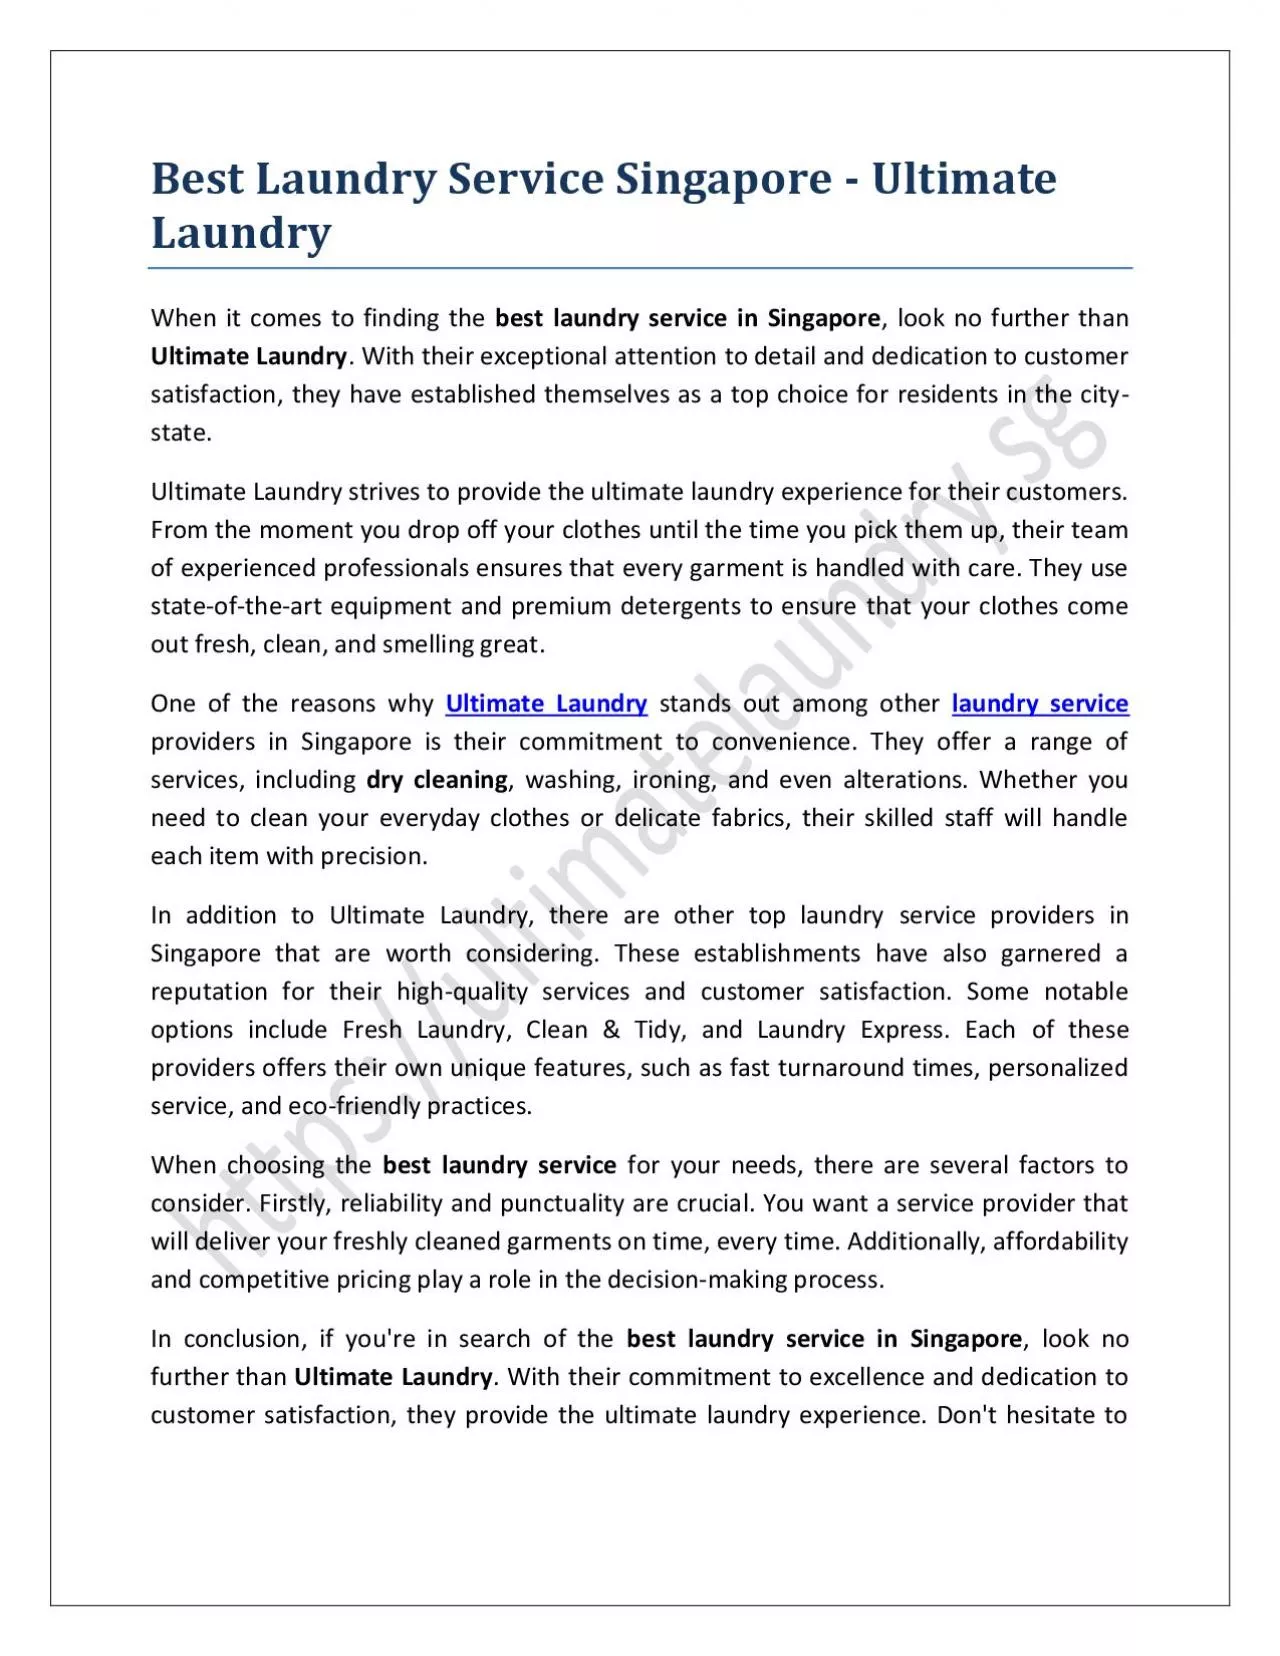 Best Laundry Service Singapore – Ultimate Laundry